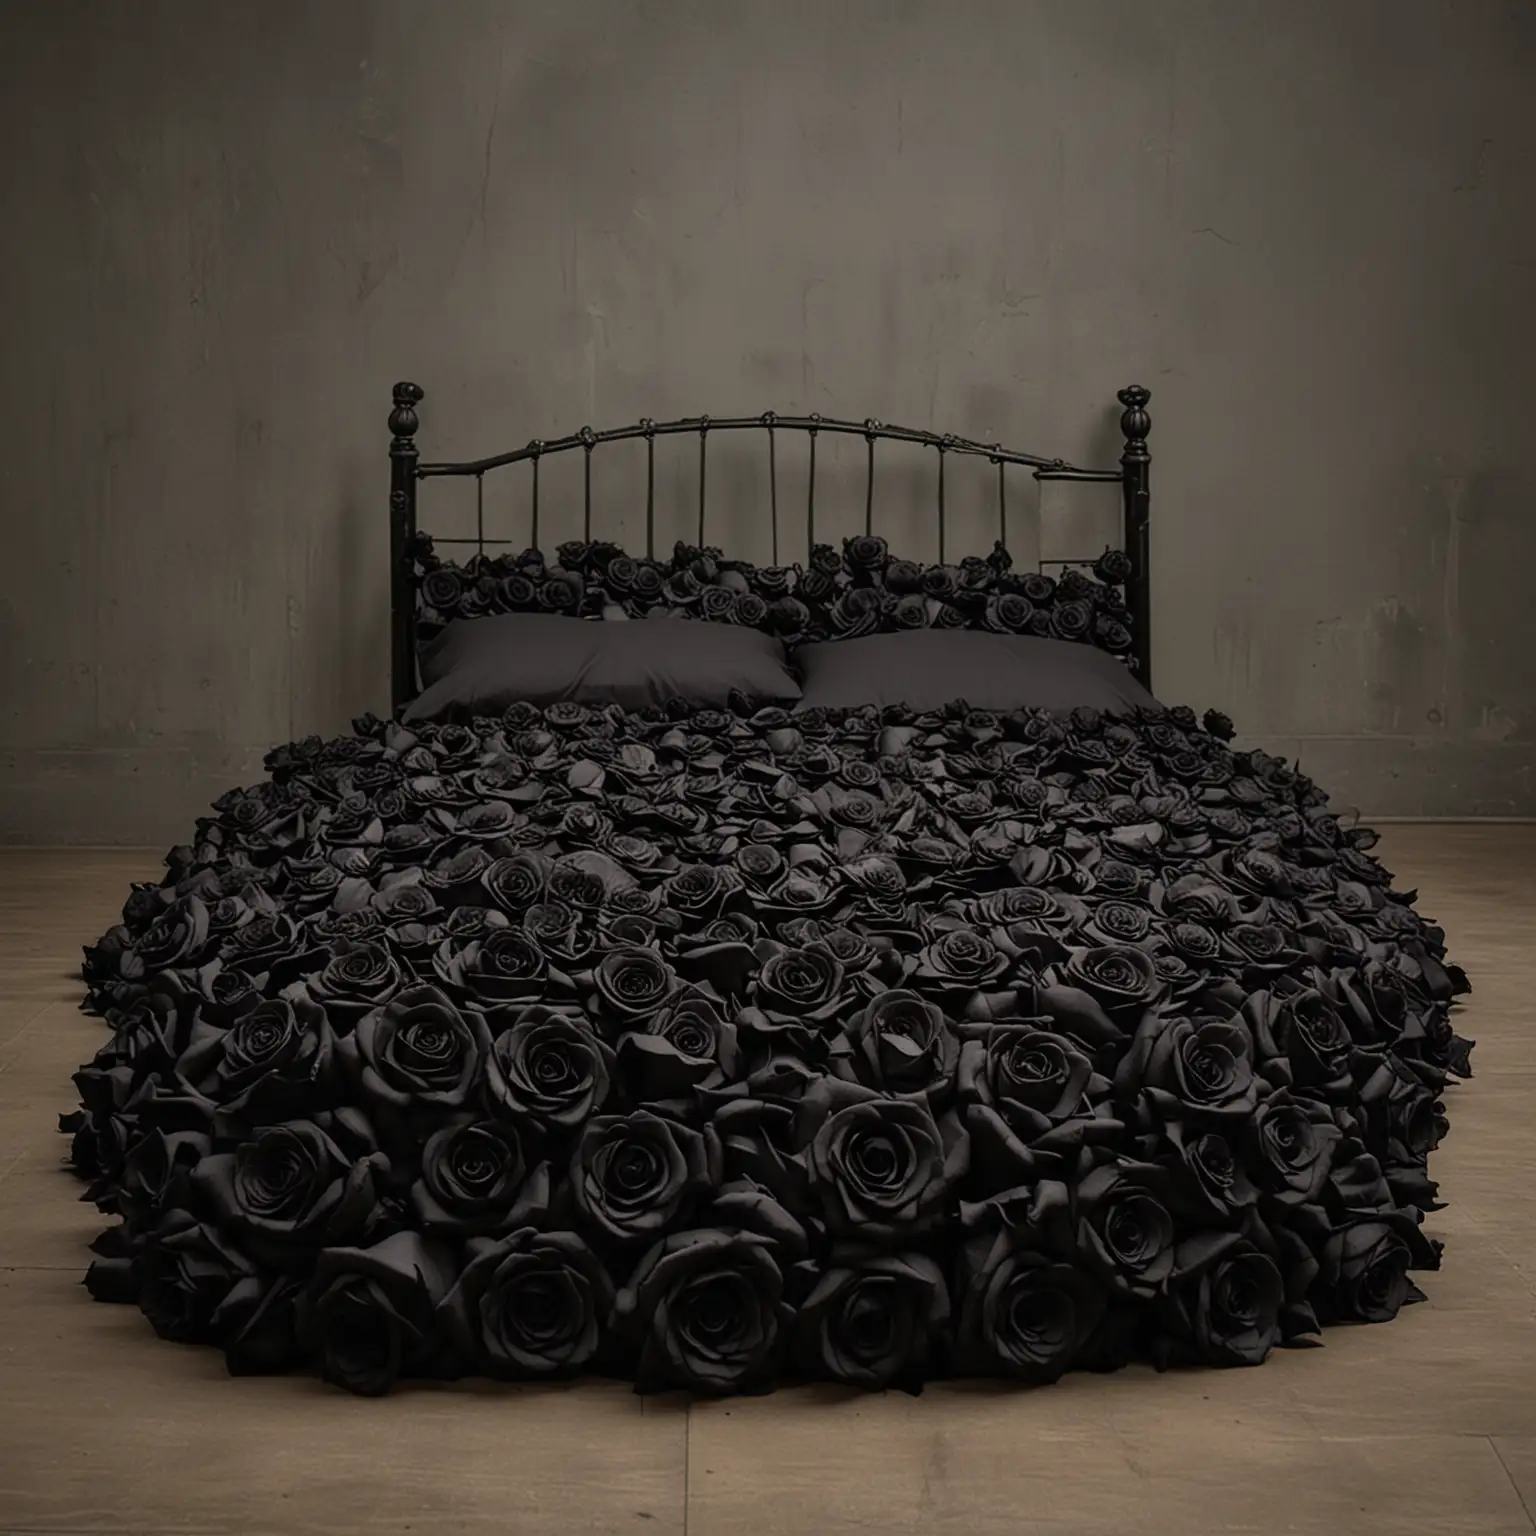 Gothic Bed of Black Roses Artwork